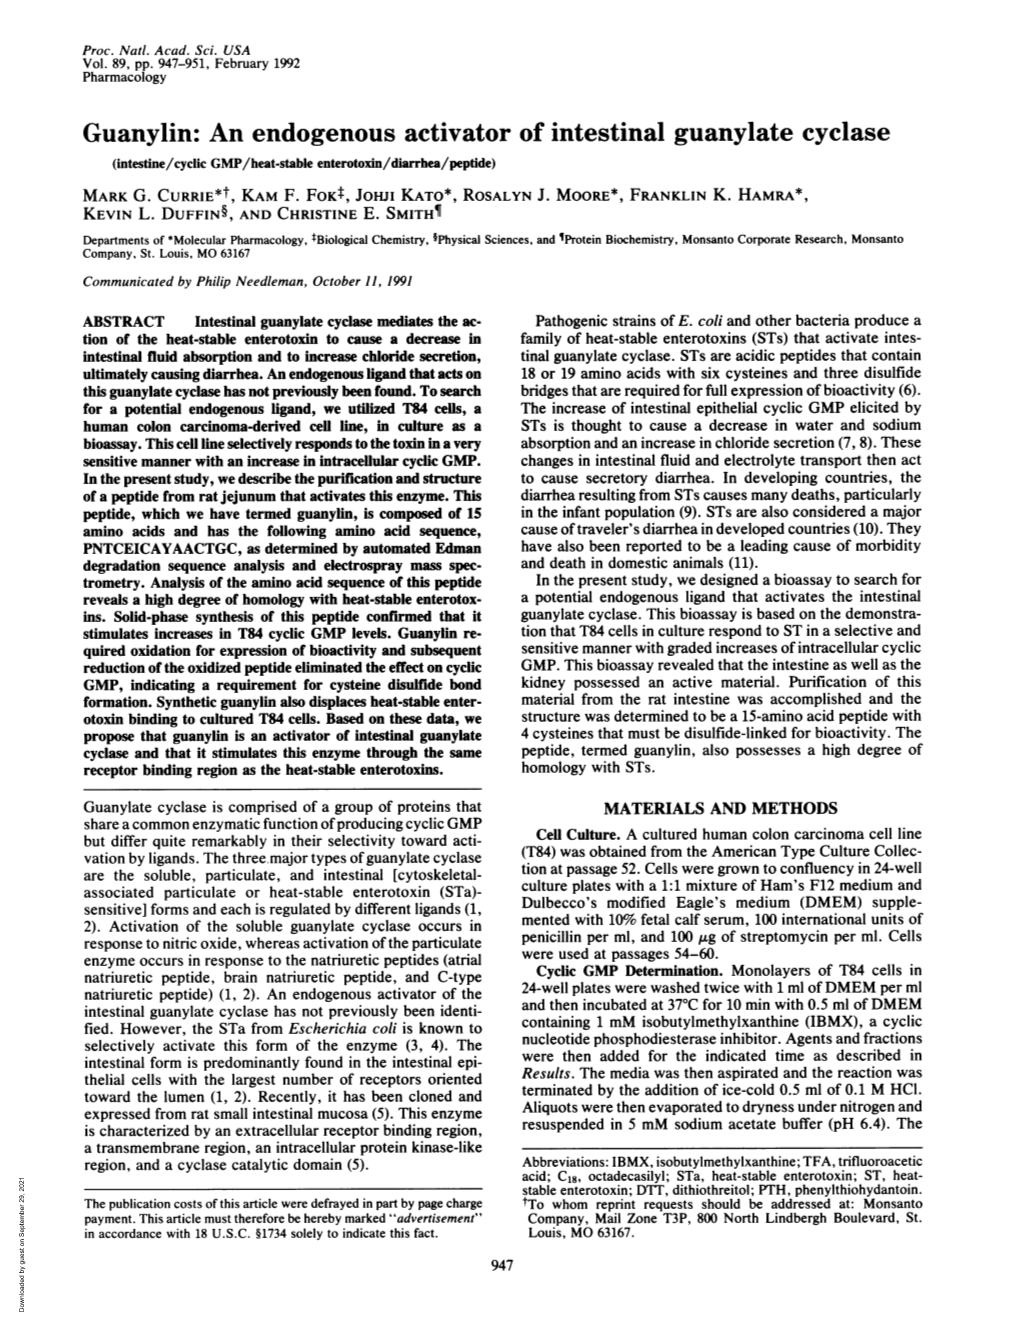 Guanylin: an Endogenous Activator of Intestinal Guanylate Cyclase (Intestine/Cyclic GMP/Heat-Stable Enterotoxin/Diarrhea/Peptide) MARK G